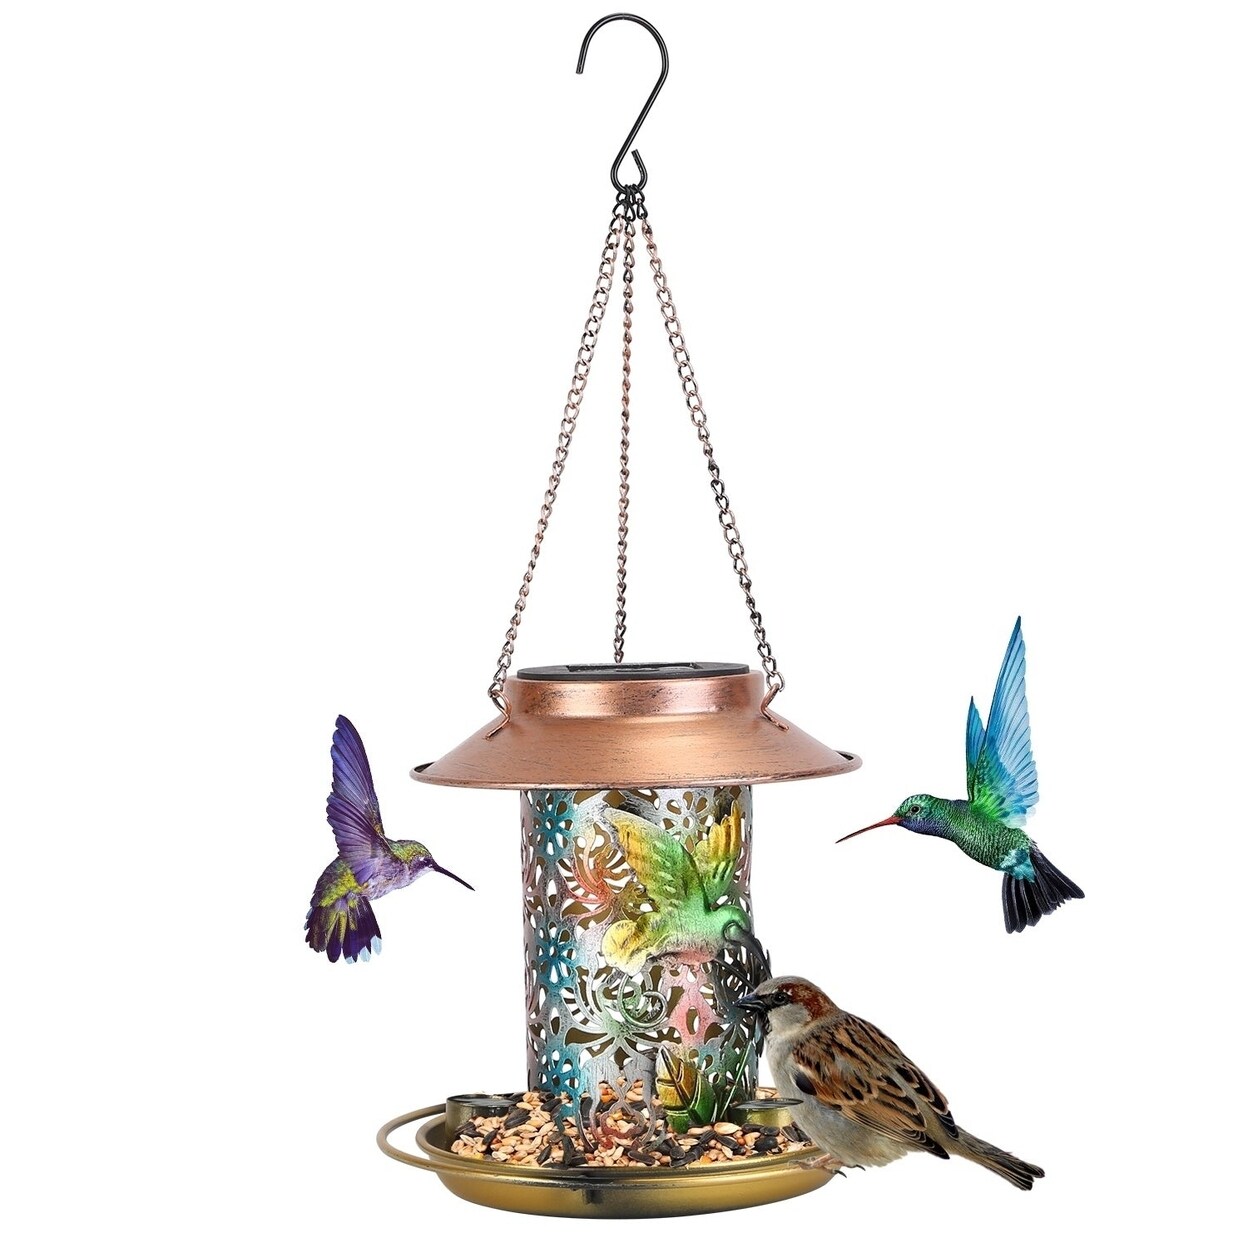 SKUSHOPS Solar Bird Feeder Decorative Hanging Bird Feeder Lantern Warm White Light Bird Feeder for Outdoor Garden Backyard